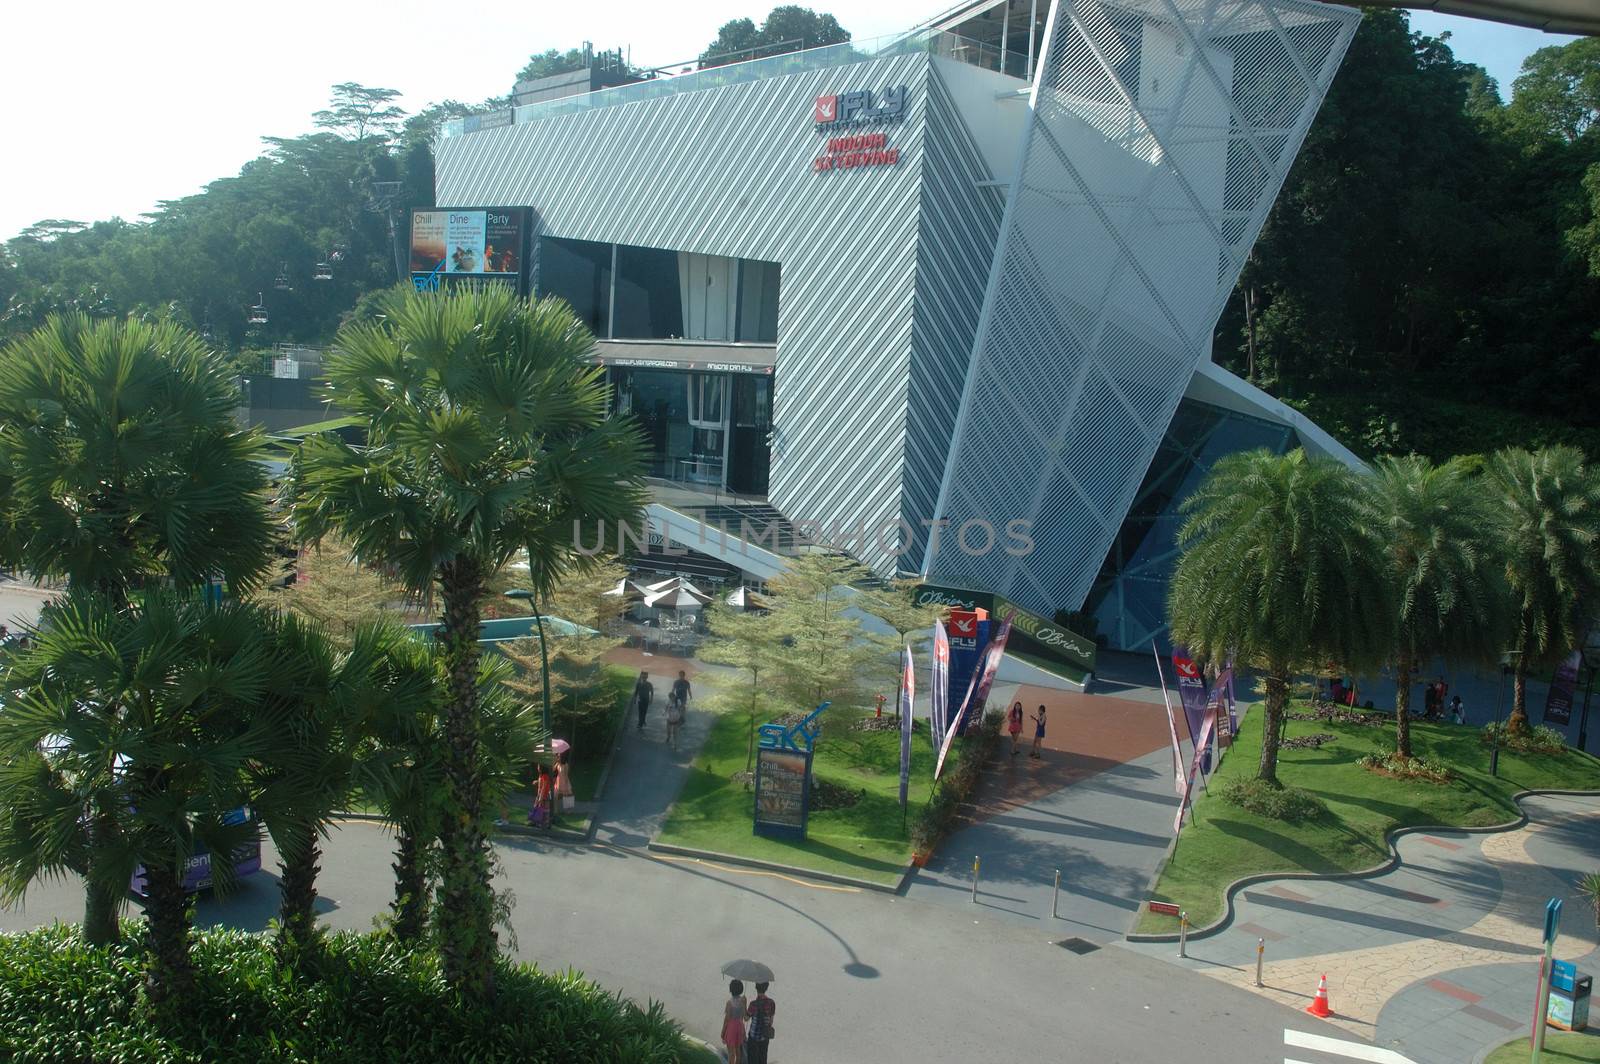 Resort World Sentosa, Singapore - April 13, 2013: iFly building exterior that located in Resort World Sentosa, Singapore.